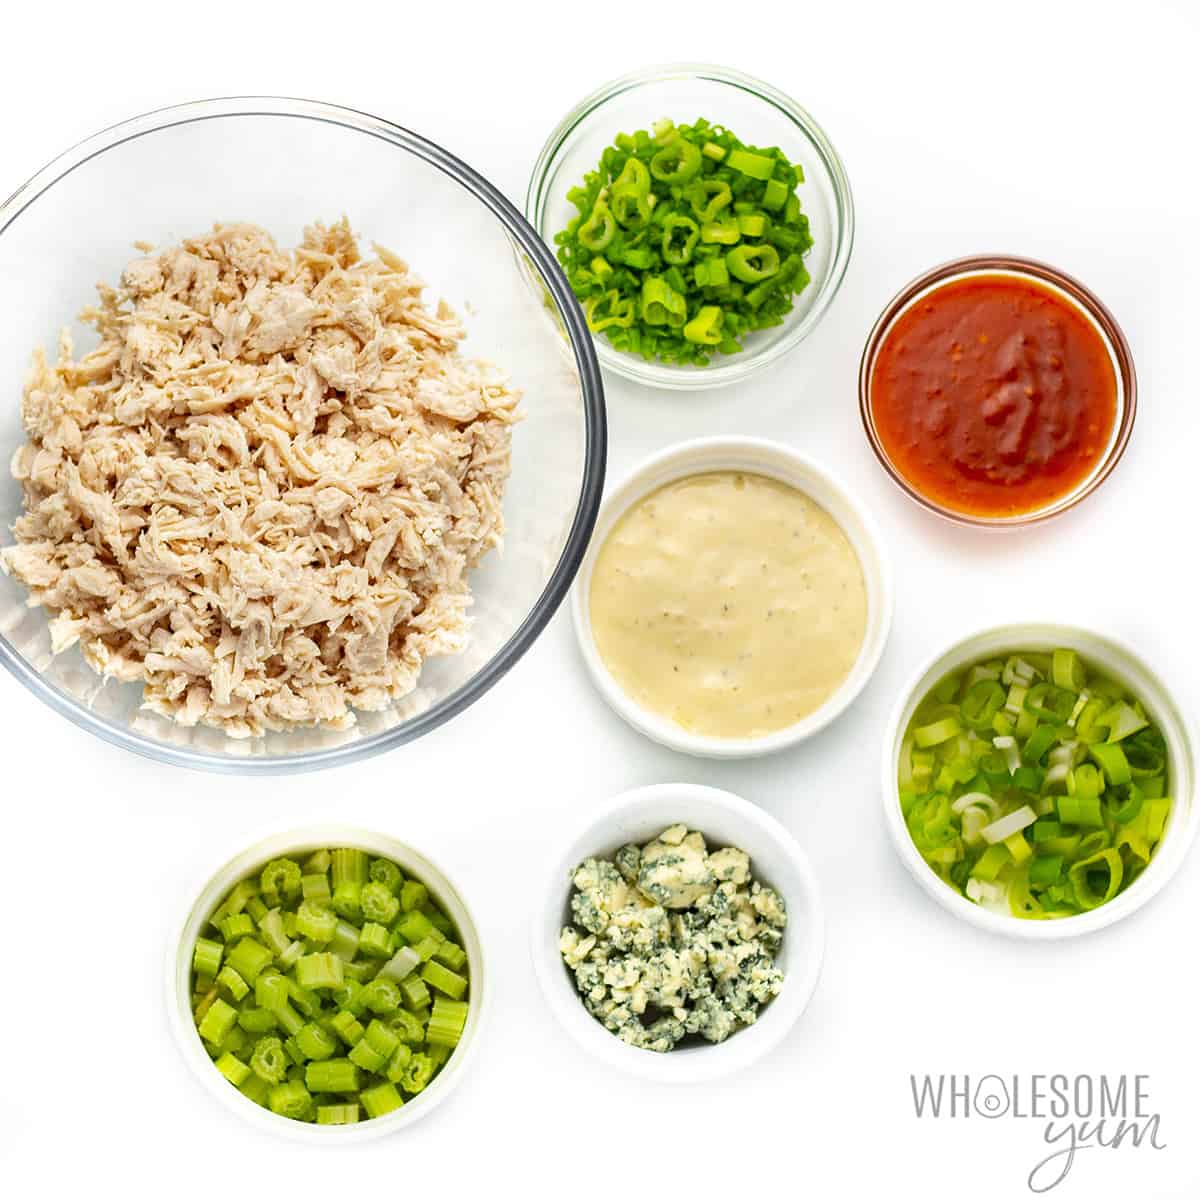 Ingredients to make buffalo chicken salad recipe.